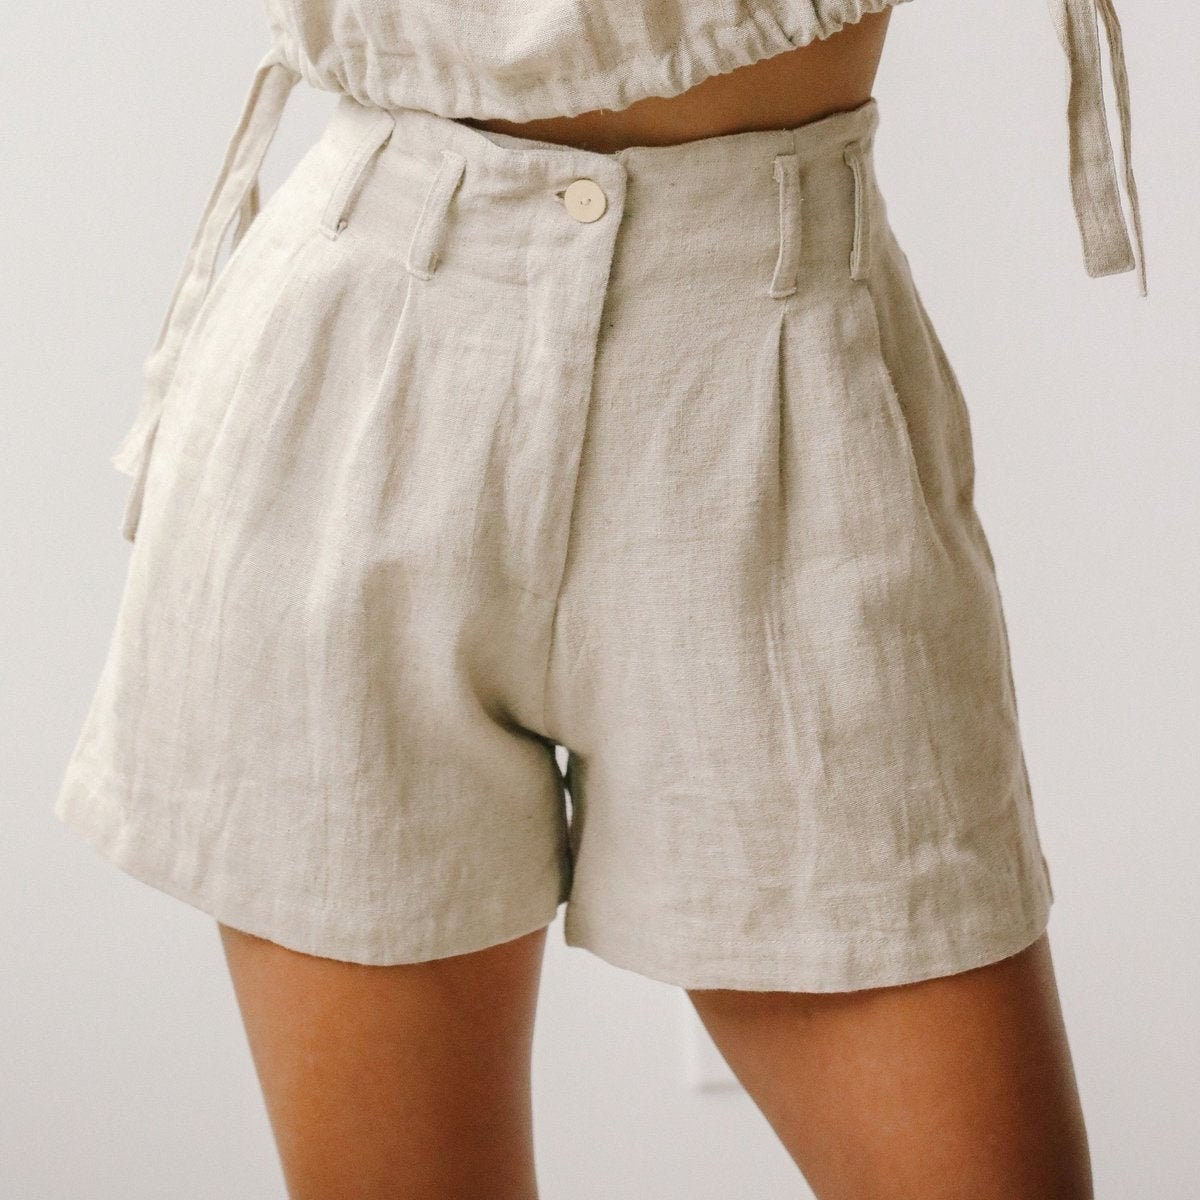 Linen Shorts for Her Linen Pure Linen Shorts Beige Linen | Etsy